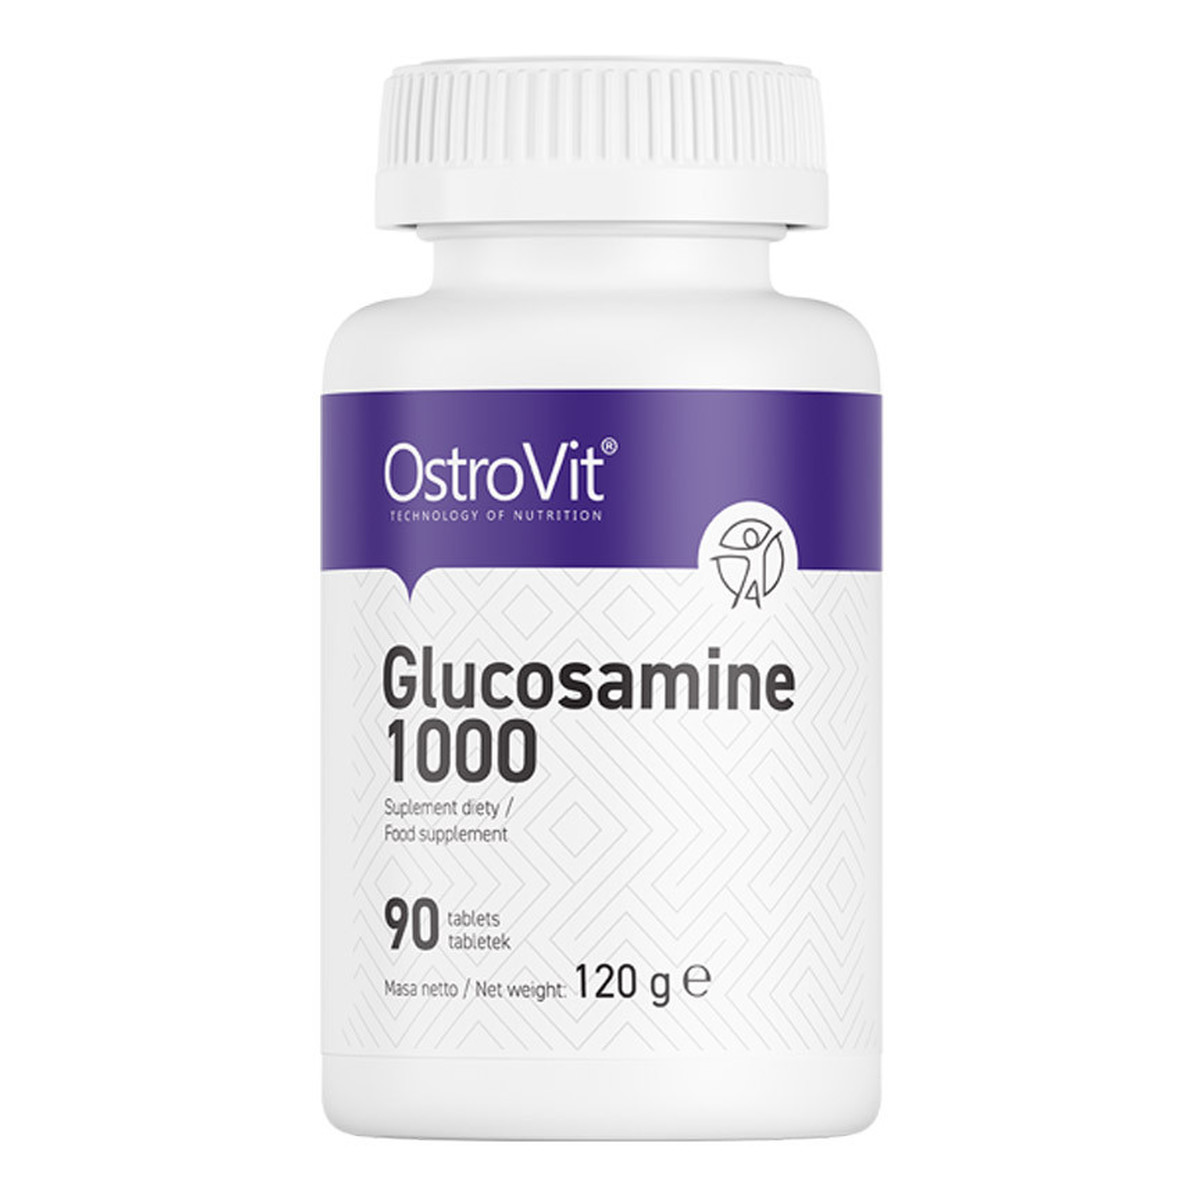 OstroVit GLUCOSAMINE Glukozamina 1000mg 90 tab